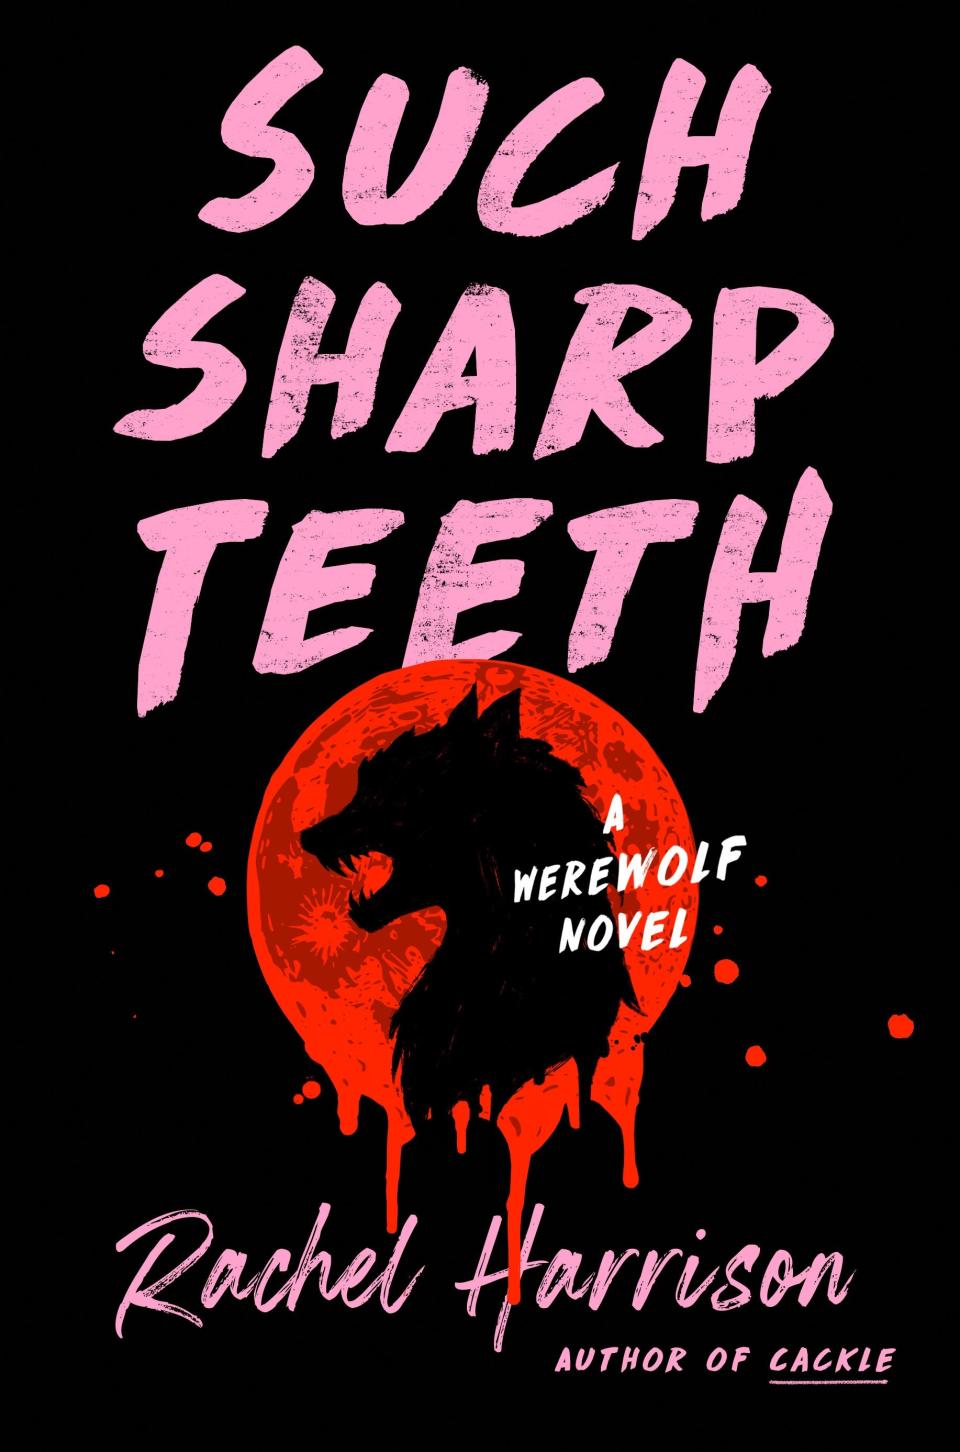 "Such Sharp Teeth" by Rachel Harrison